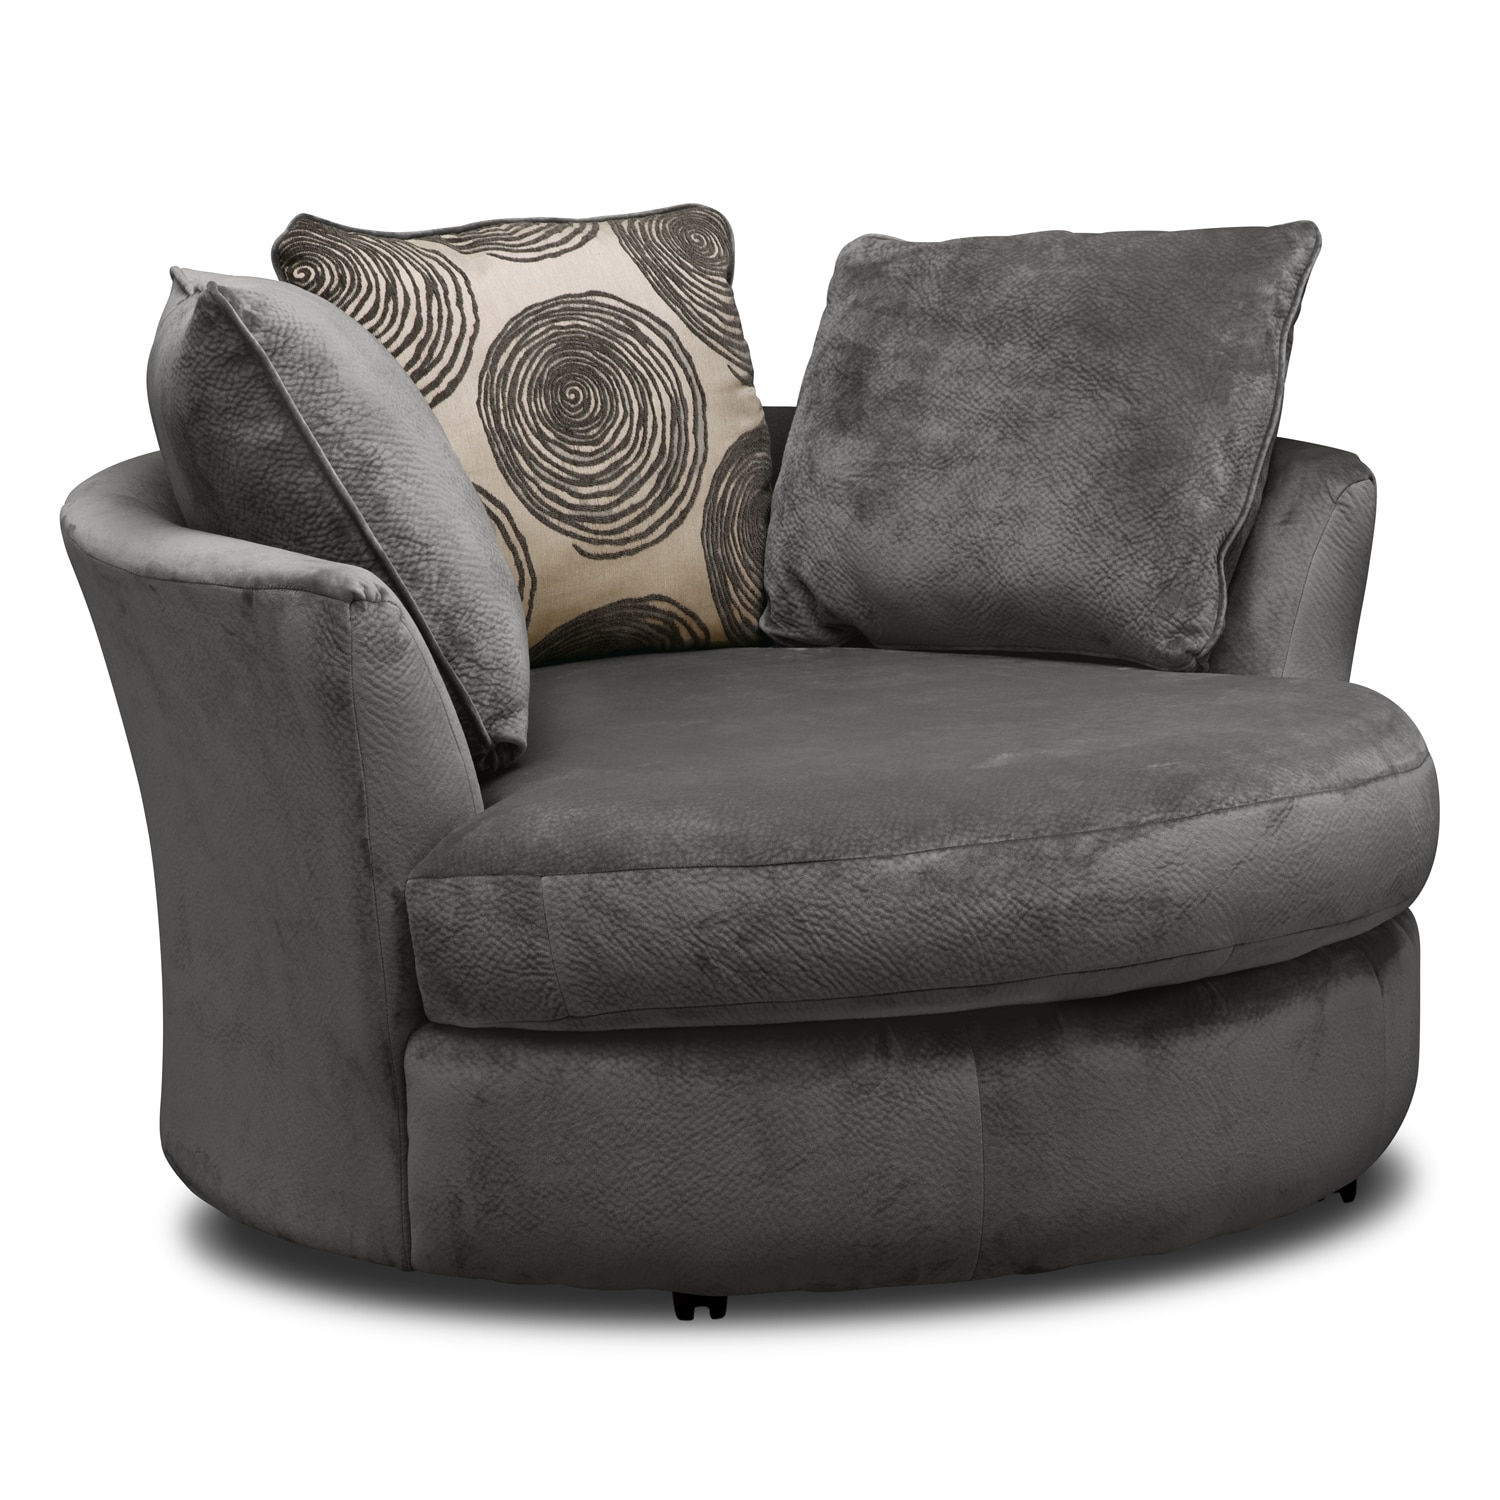 Cordelle Swivel Chair - Gray | Value City Furniture